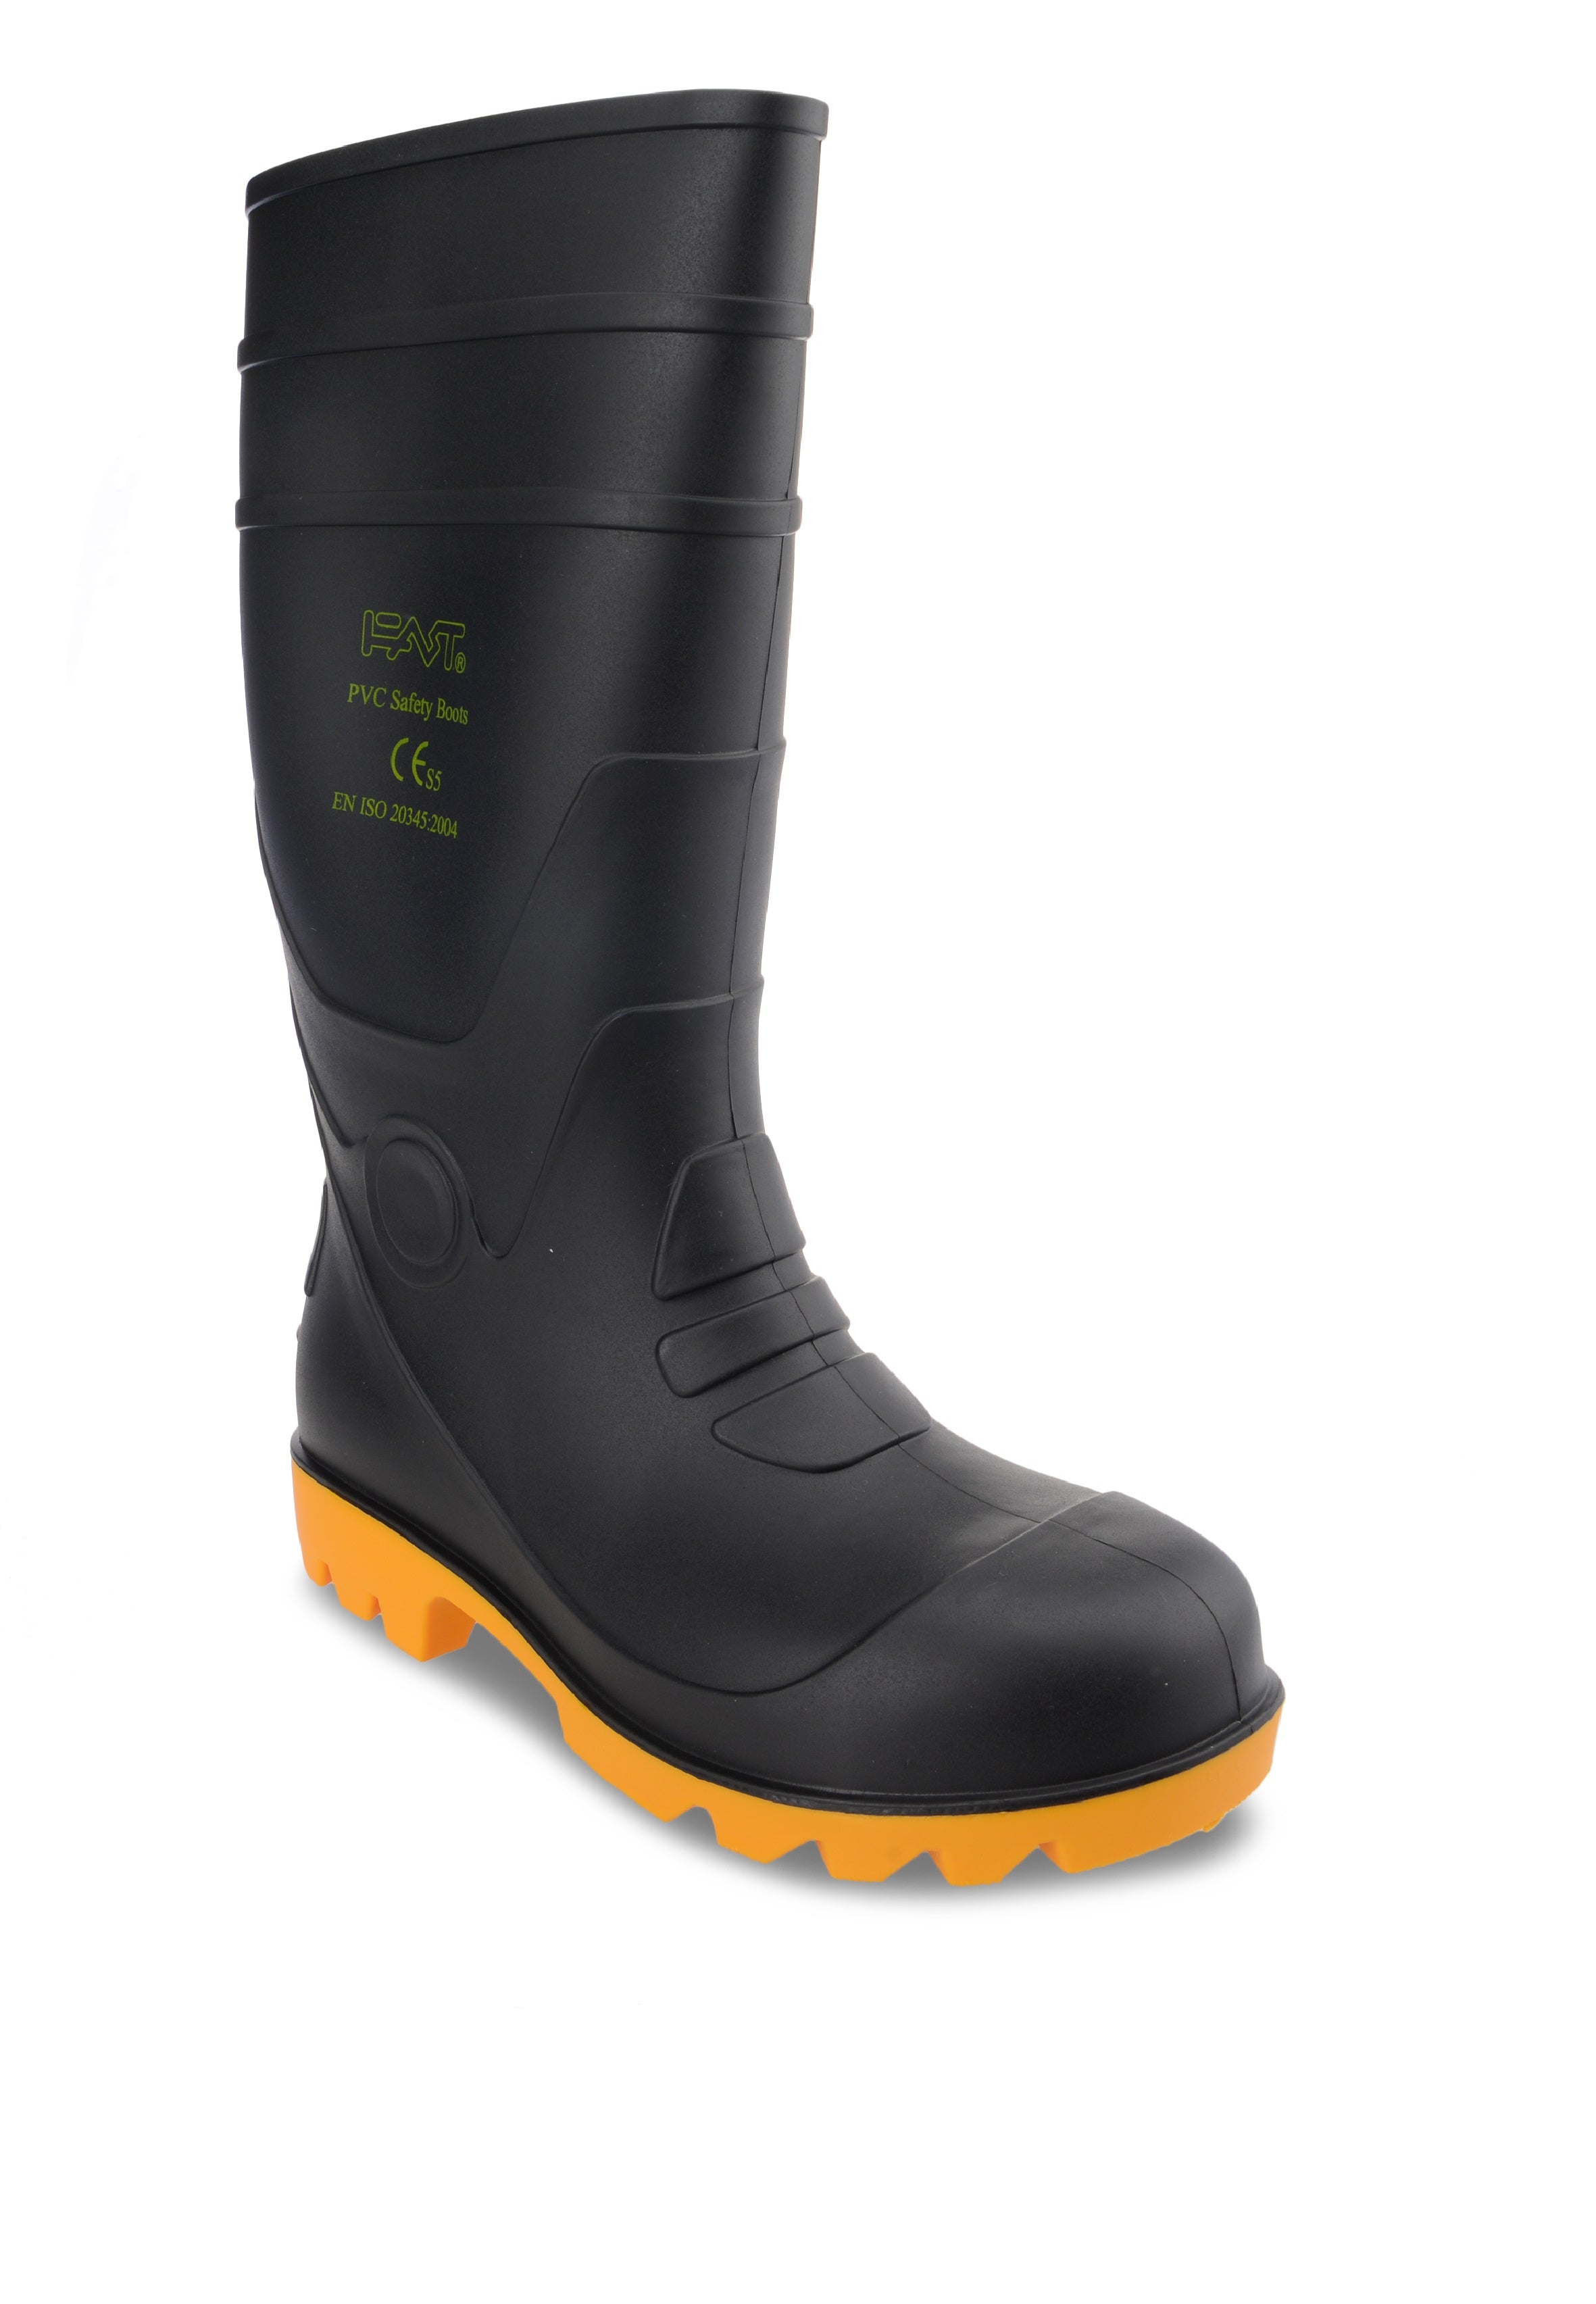 Safety Rain Boots (Steel Toe Cap + Steel Soles)-FAST-BK-EU Size: 37-偉豐鞋 WELL SHOE HK-Well Shoe-偉豐鞋-偉豐網-荃灣鞋店-Functional shoes-Hong Kong Tsuen Wan Shoe Store-Tai Wan Shoe-Japan Shoe-高品質功能鞋-台灣進口鞋-日本進口鞋-High-quality shoes-鞋類配件-荃灣進口鞋-香港鞋店-優質鞋類產品-水靴-帆布鞋-廚師鞋-香港鞋品牌-Hong Kong Shoes brand-長者鞋-Hong Kong Rain Boots-Kitchen shoes-Cruthes-Slipper-Well Shoe Hong Kong-Anello-Arriba-休閒鞋-舒適鞋-健康鞋-皮鞋-Healthy shoes-Leather shoes-Hiking shoes